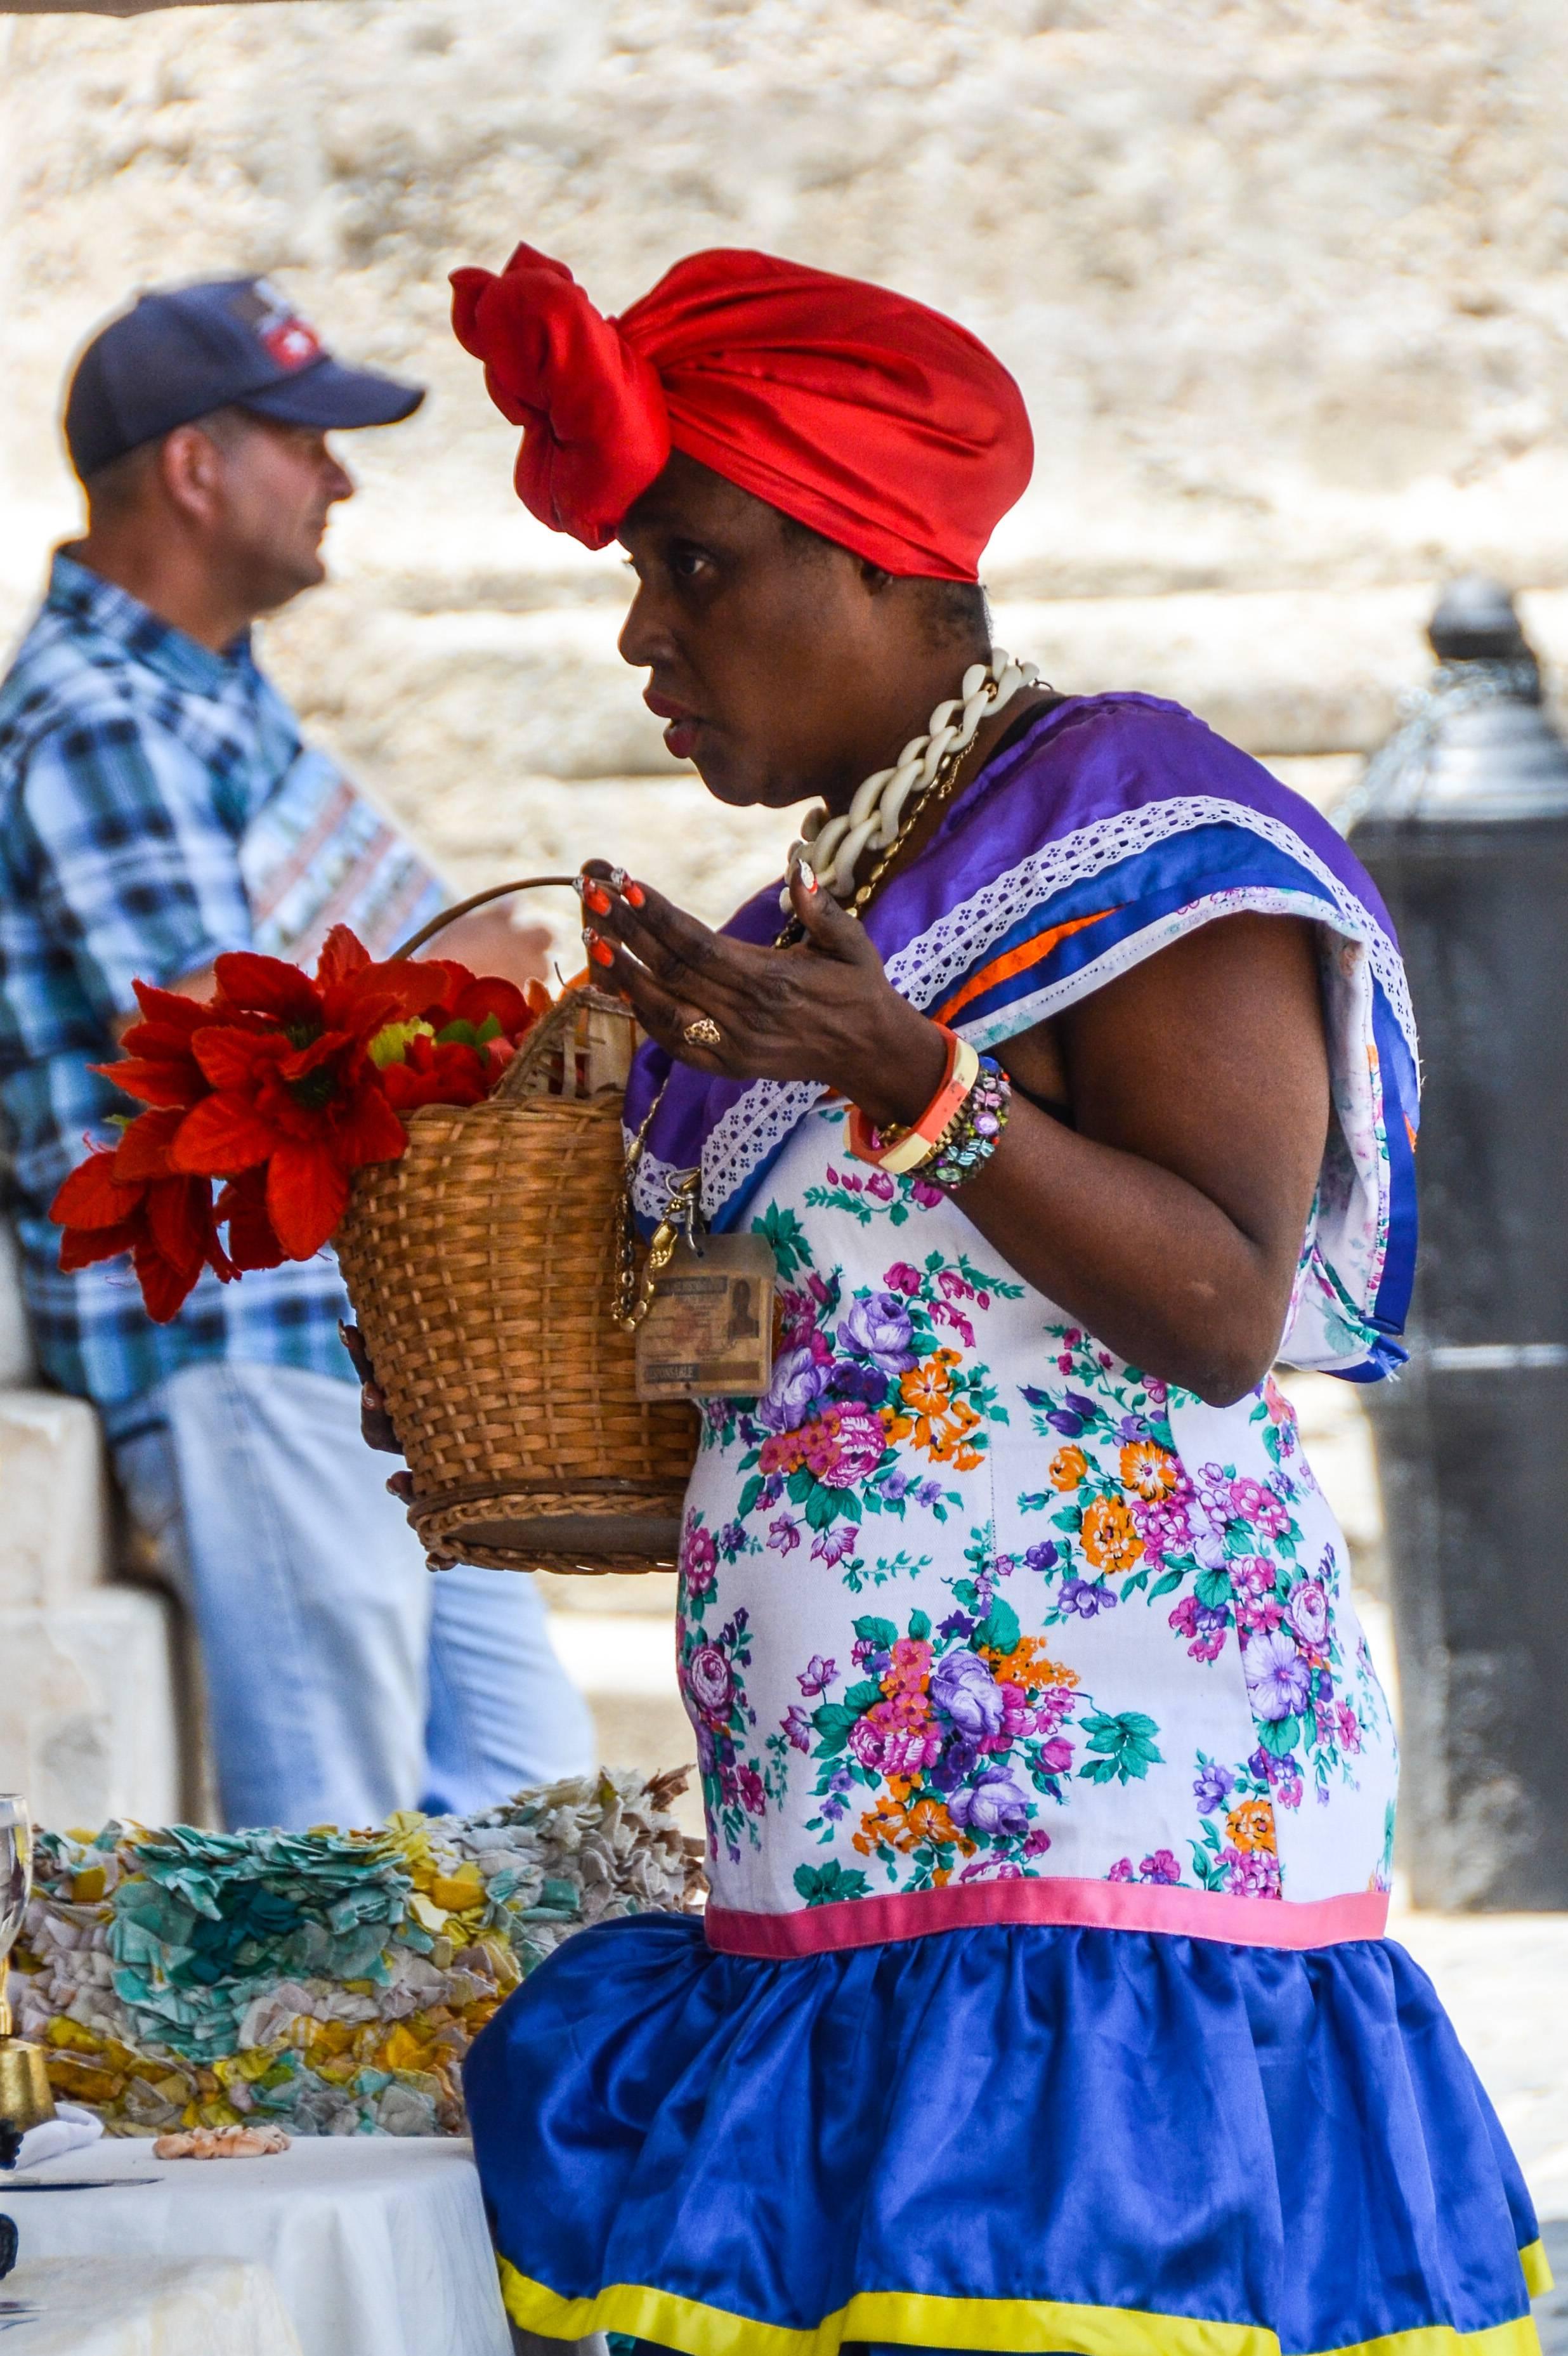 Marie Triller Portrait Photograph - Color Photograph -- Woman in Traditional Attire, Havana